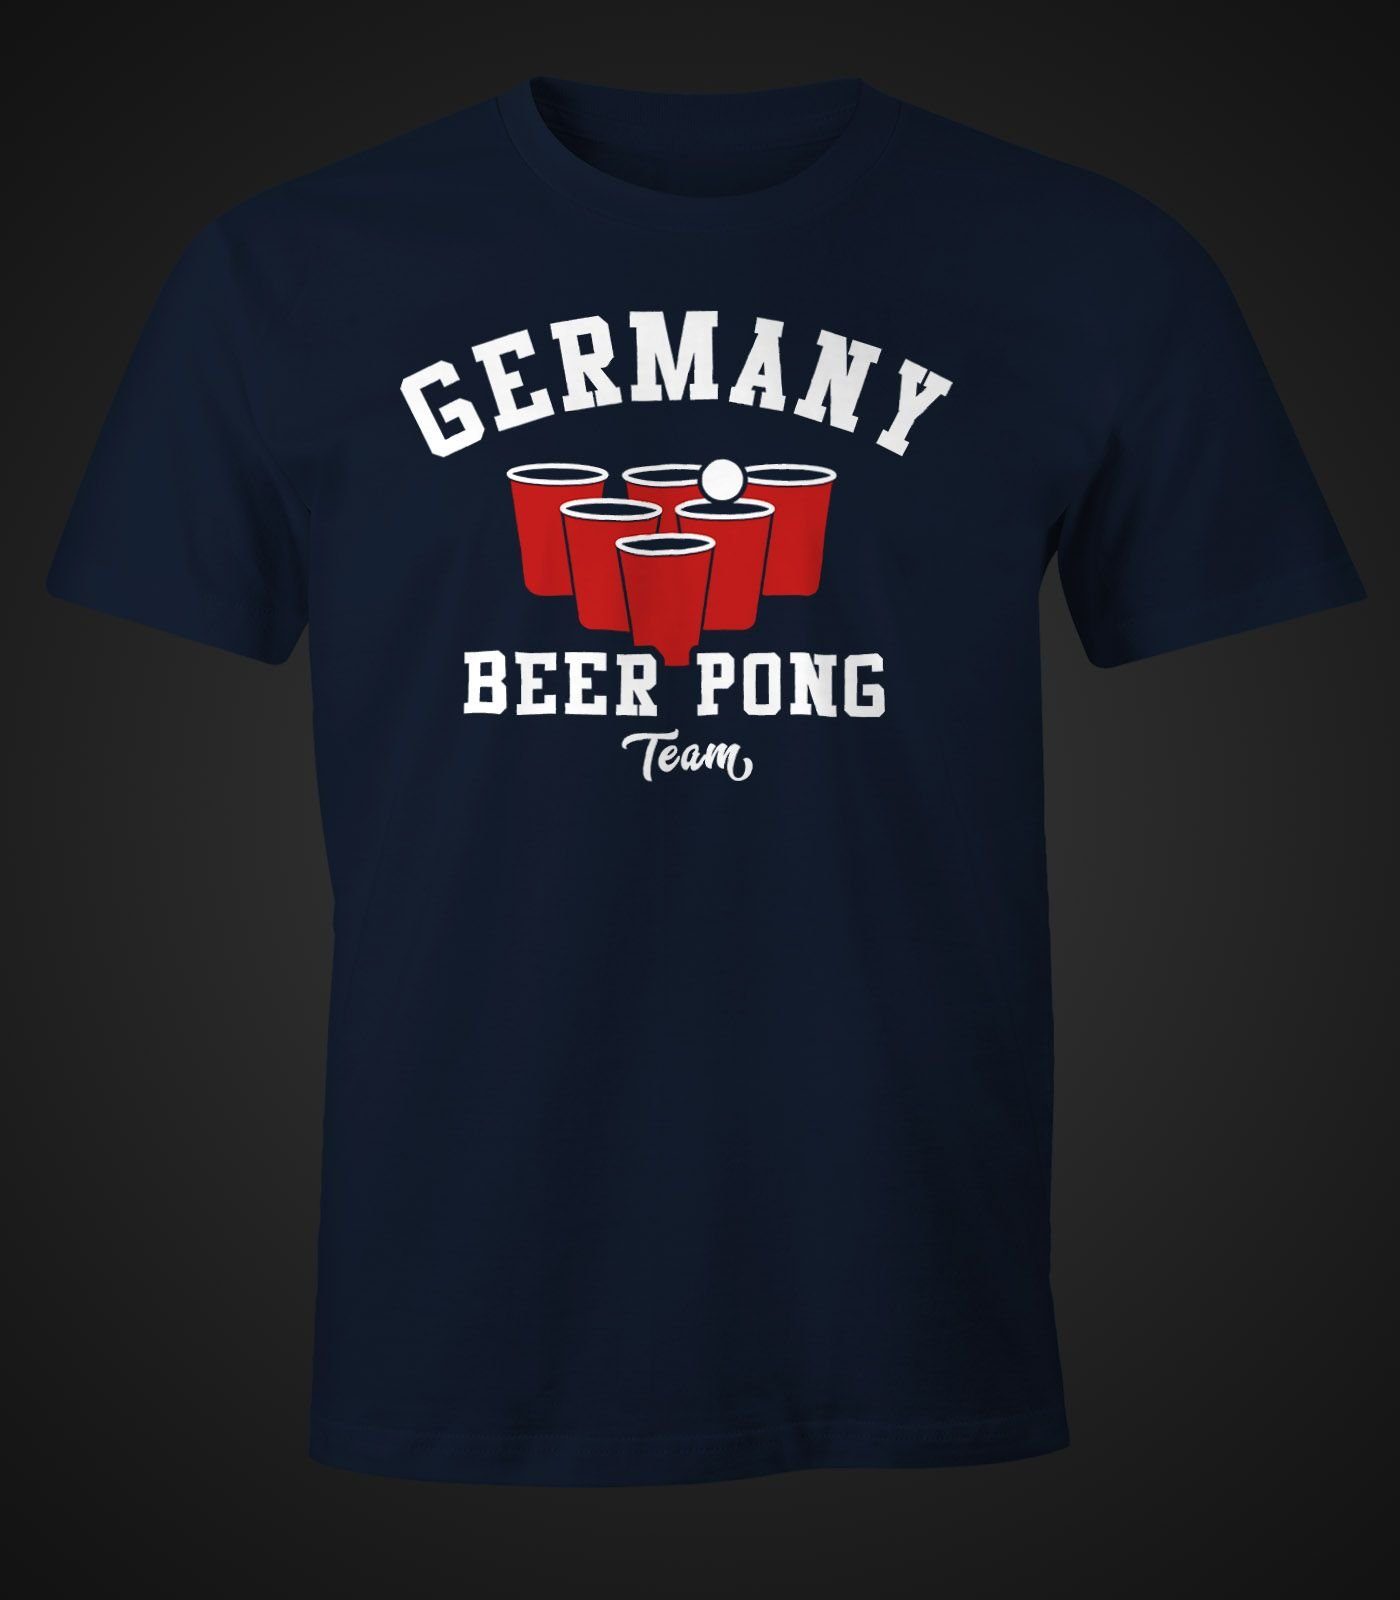 mit Moonworks® Print Team Fun-Shirt Herren T-Shirt Pong Germany Beer Bier MoonWorks Print-Shirt navy